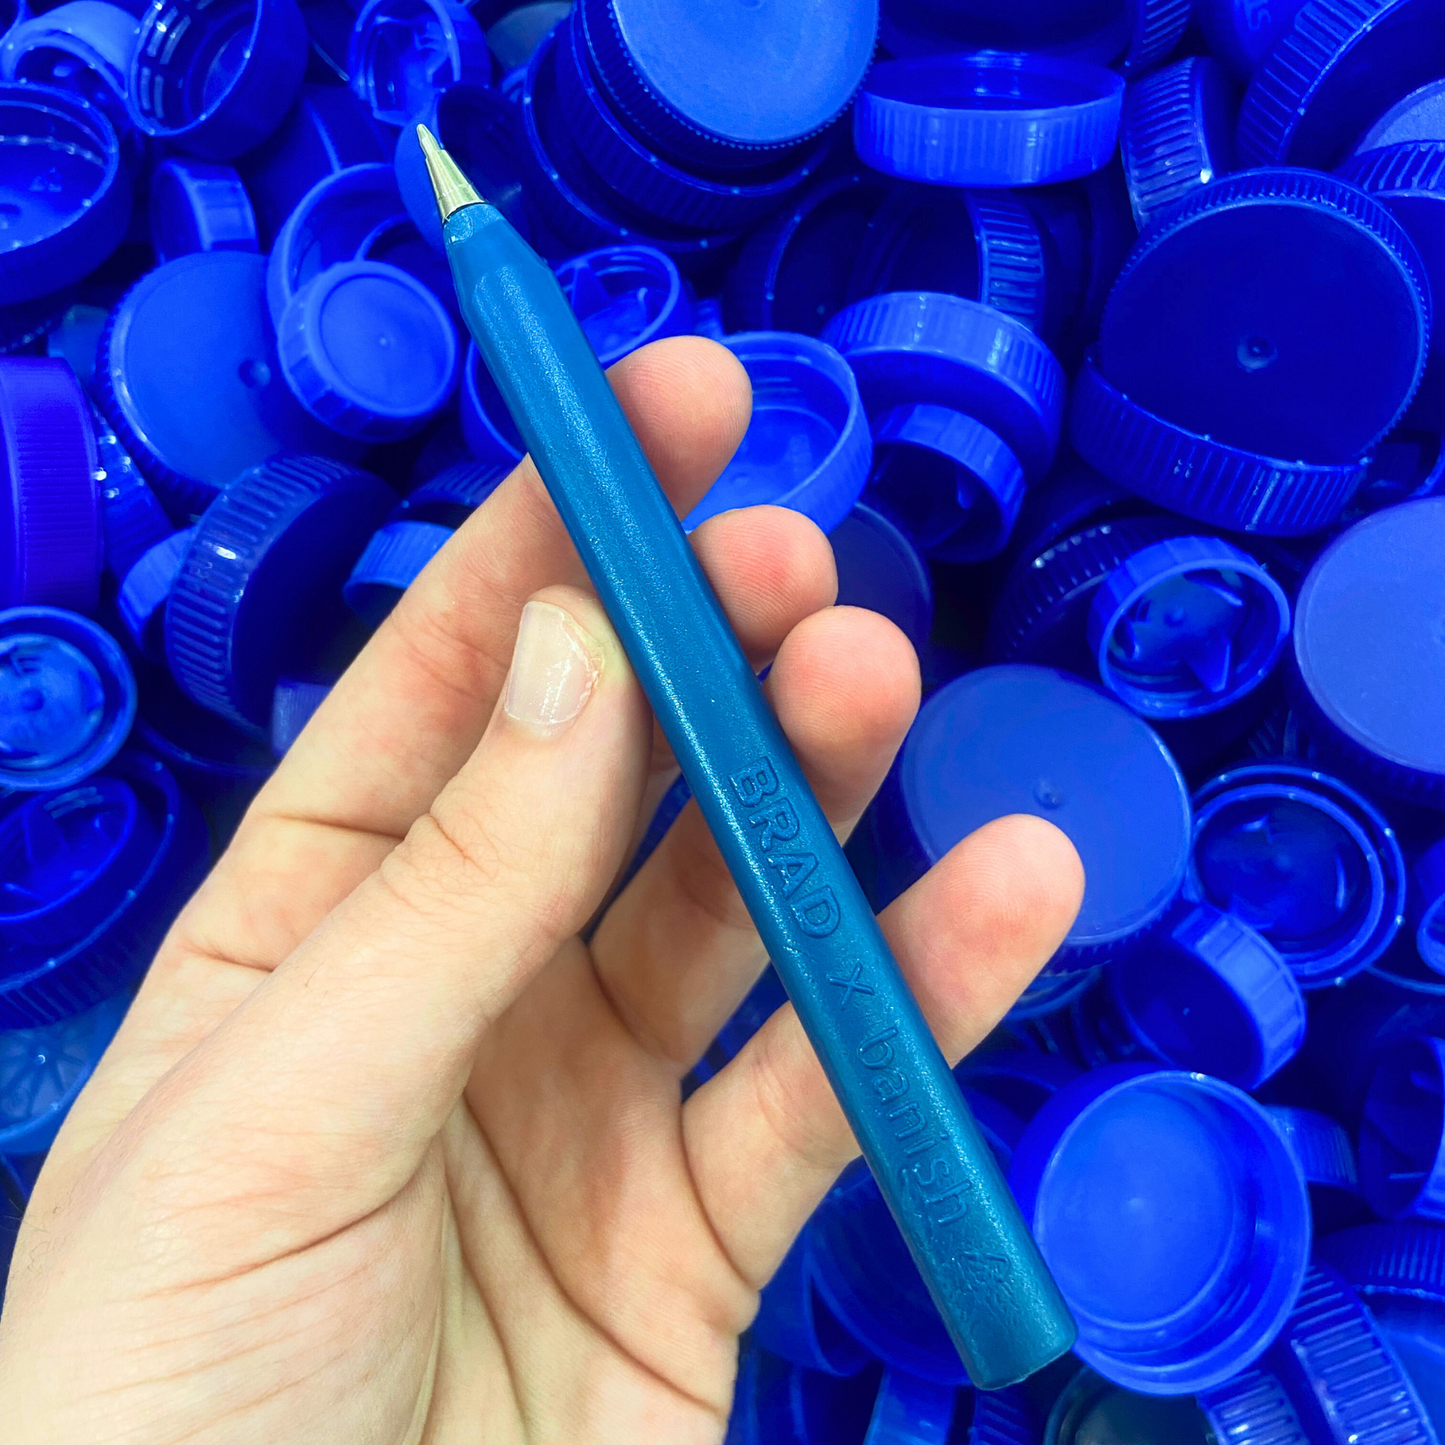 Recycled BRAD Plastic Pen